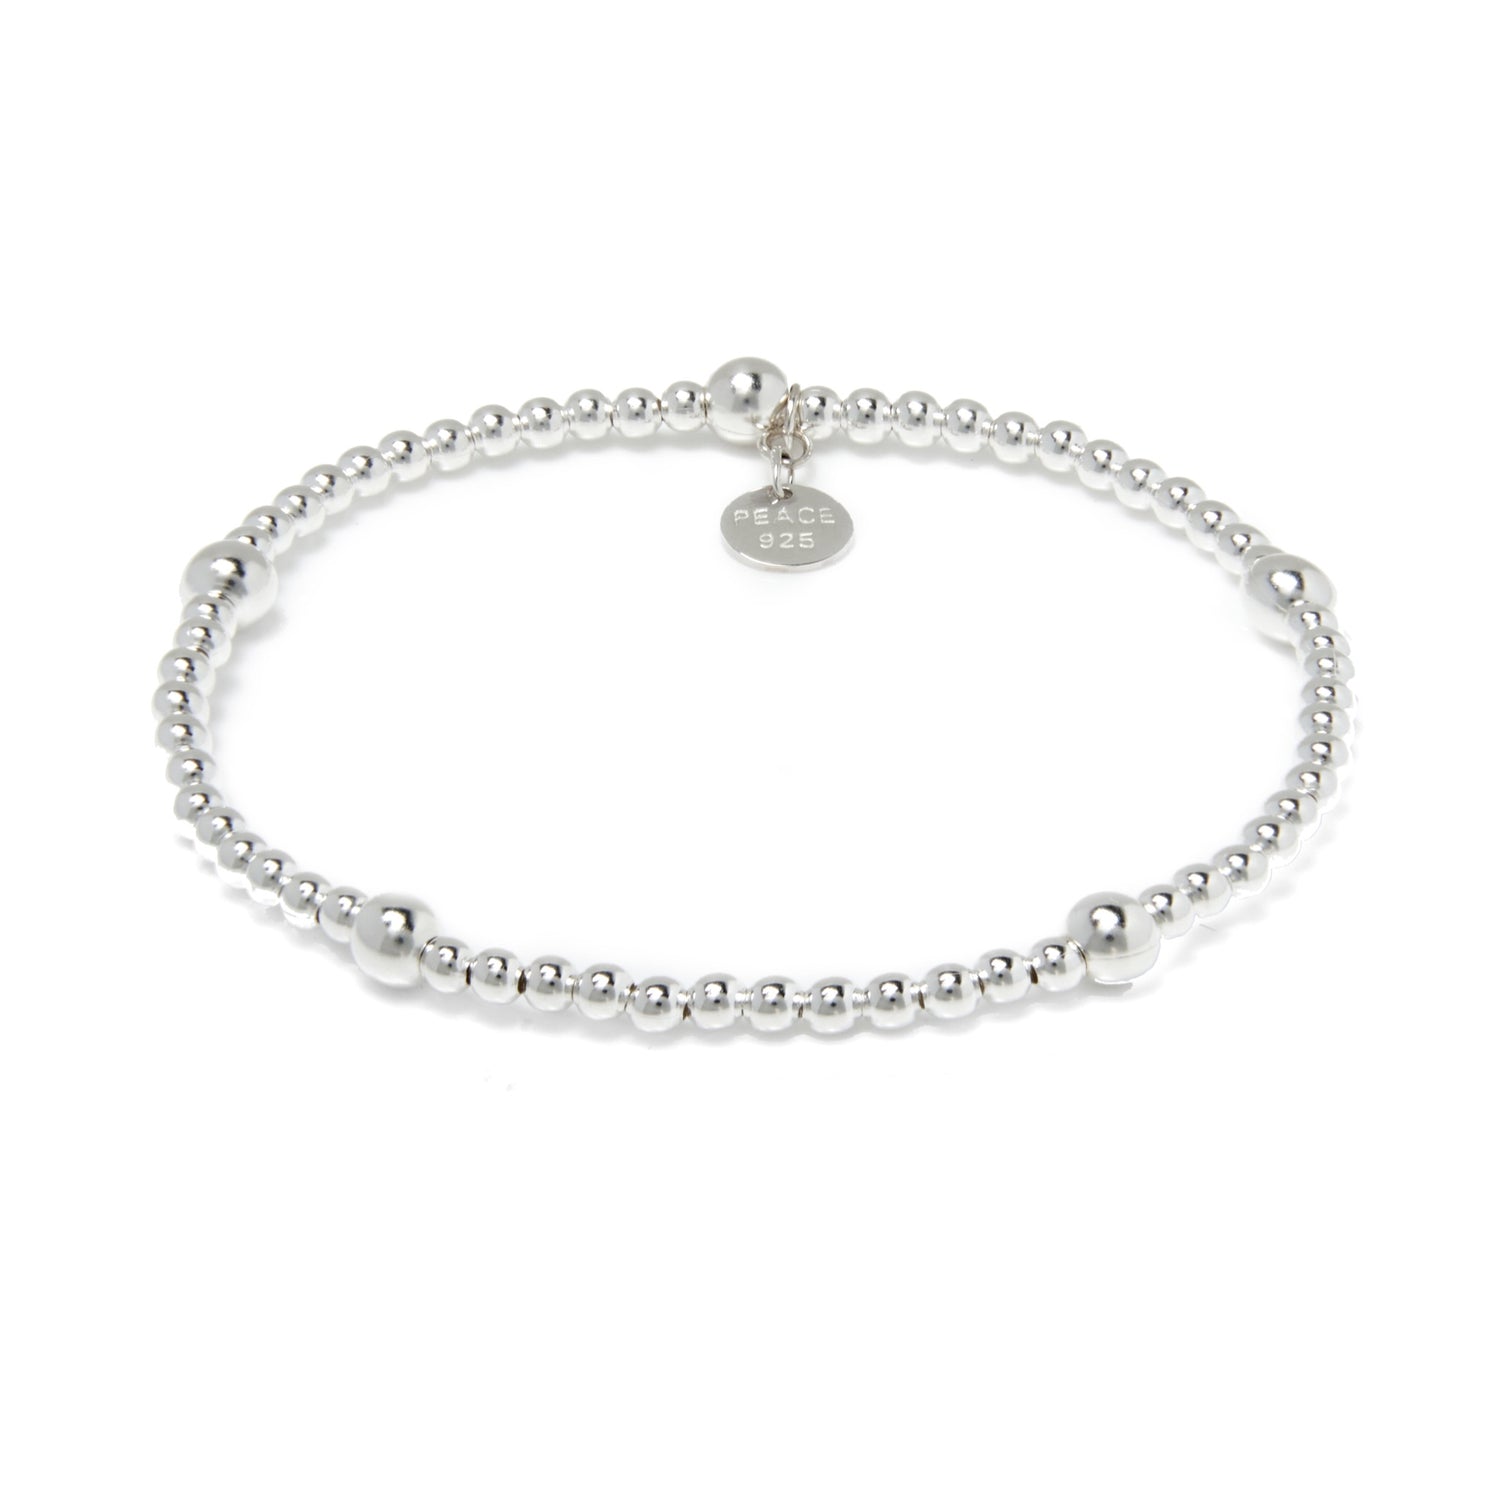 Sterling silver high polish finish ball bead stretch bracelet.